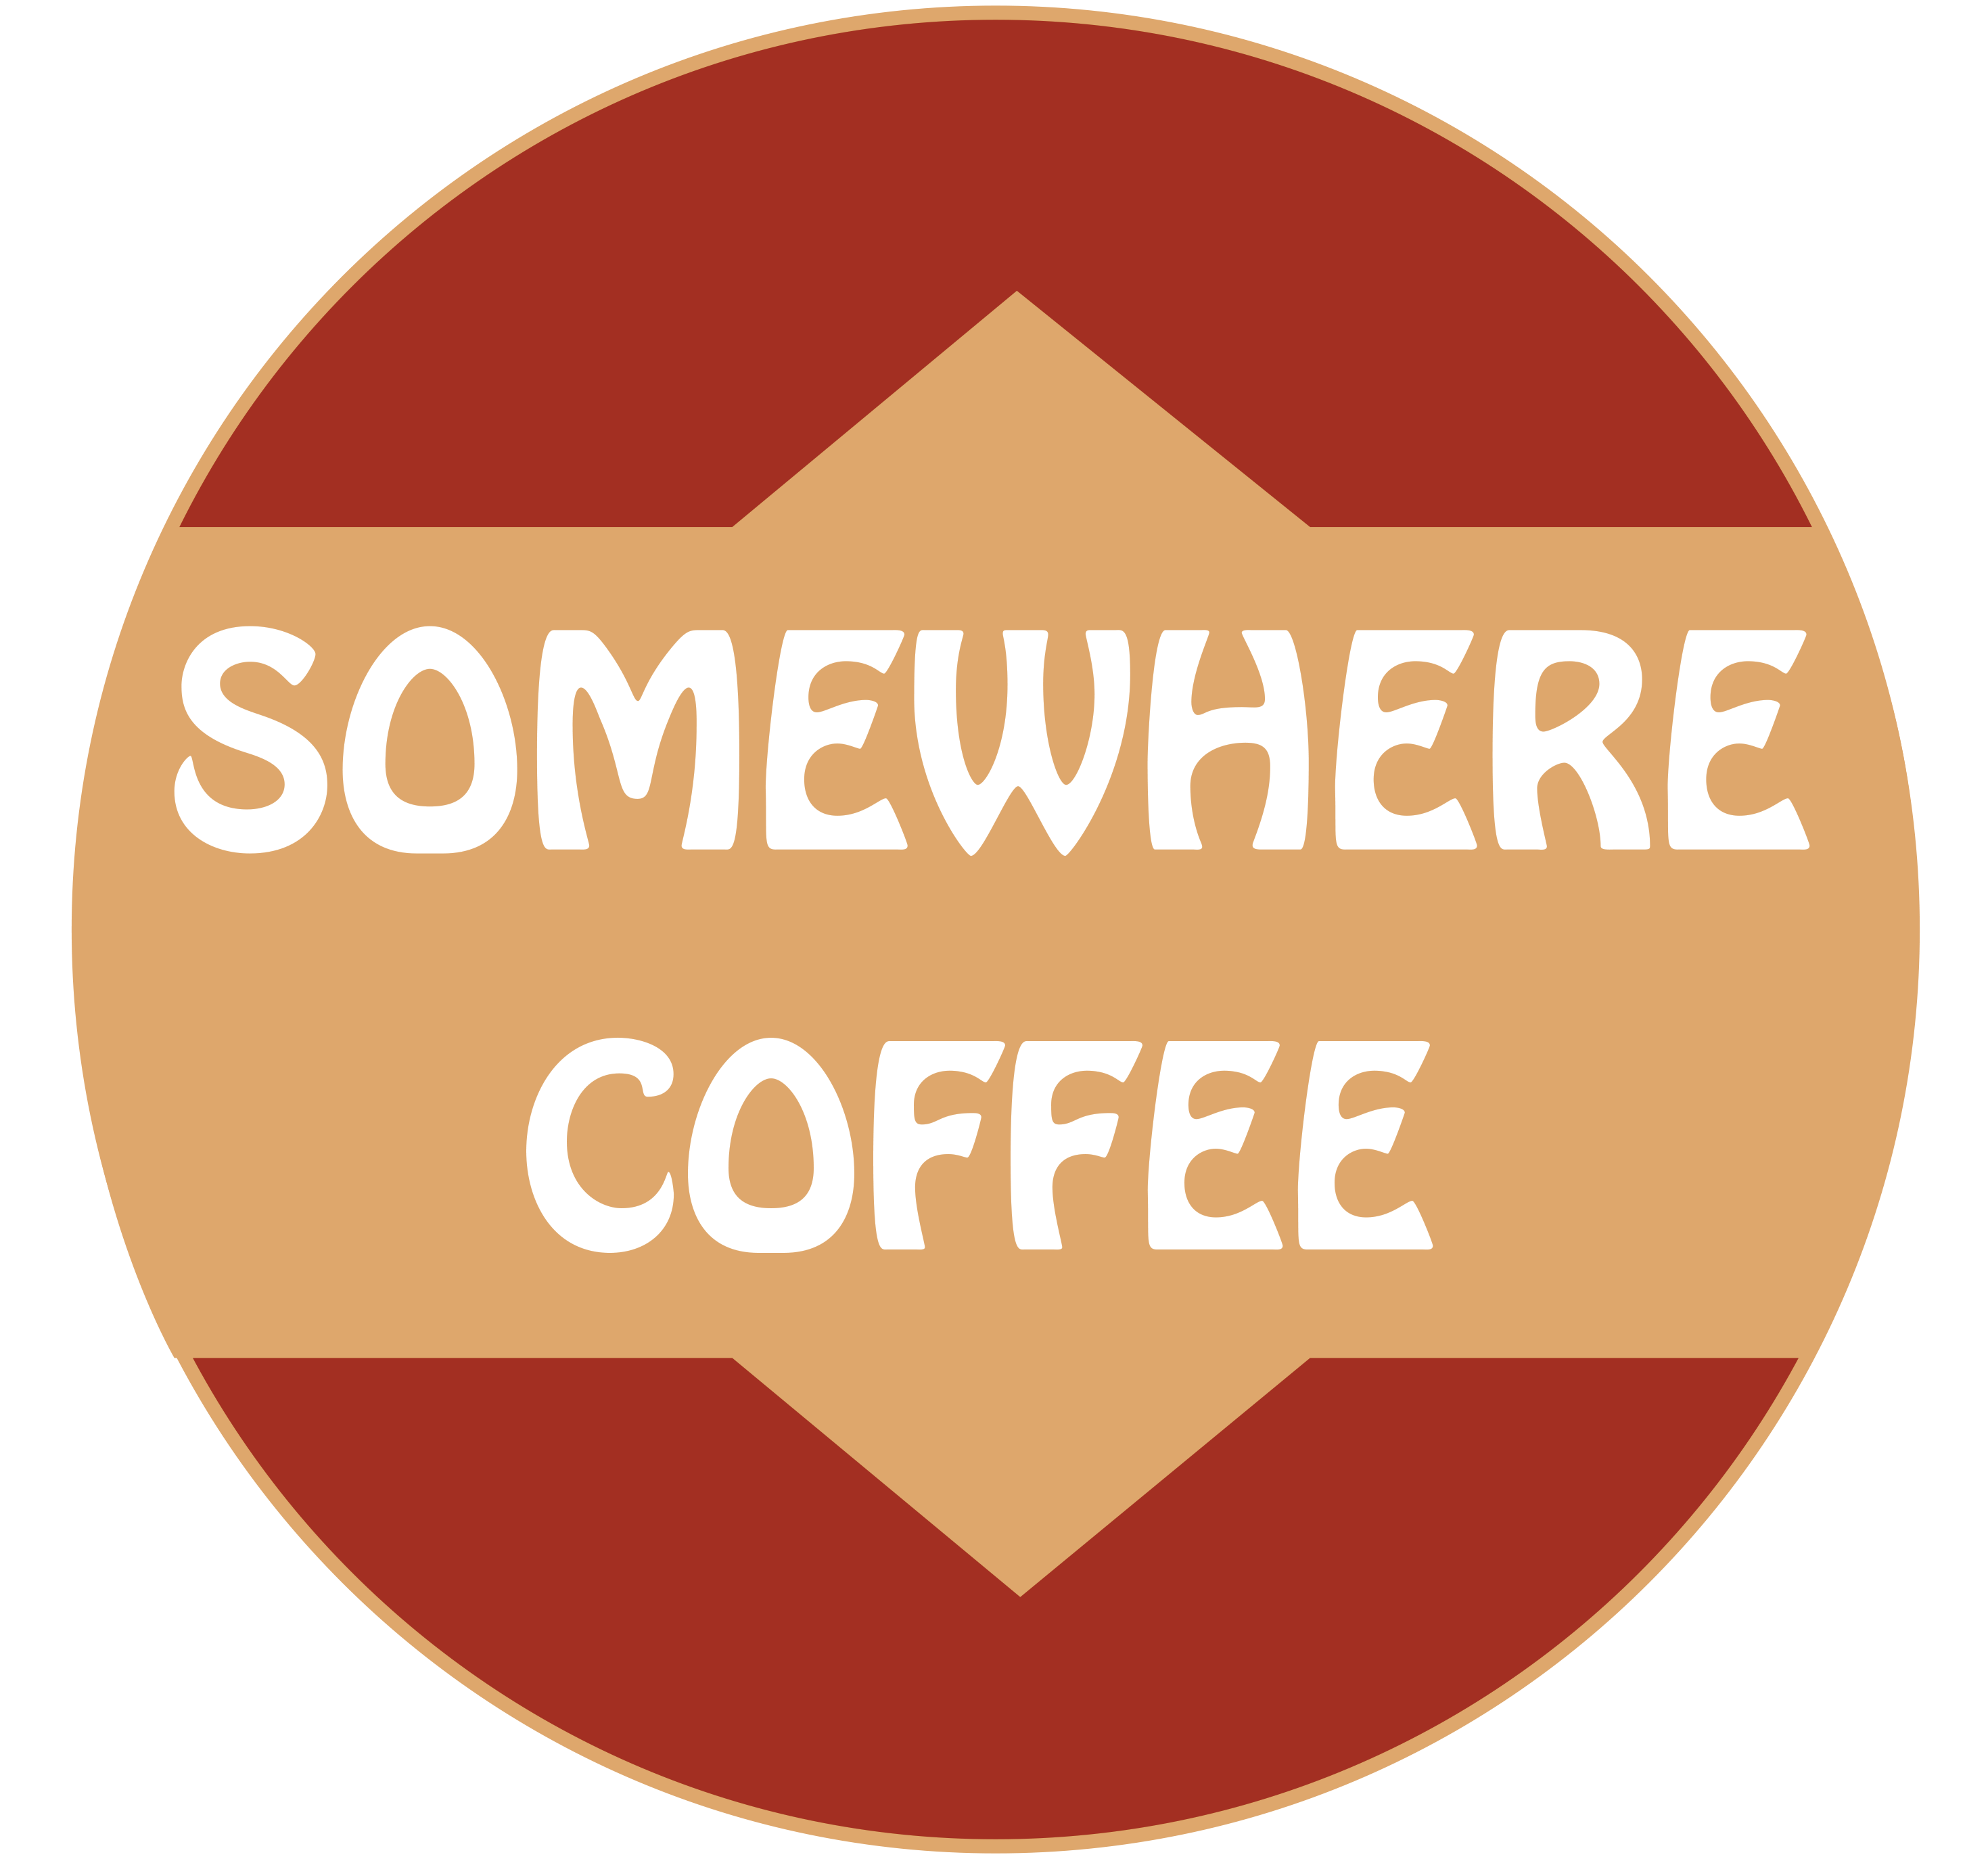 Somewhere Coffee